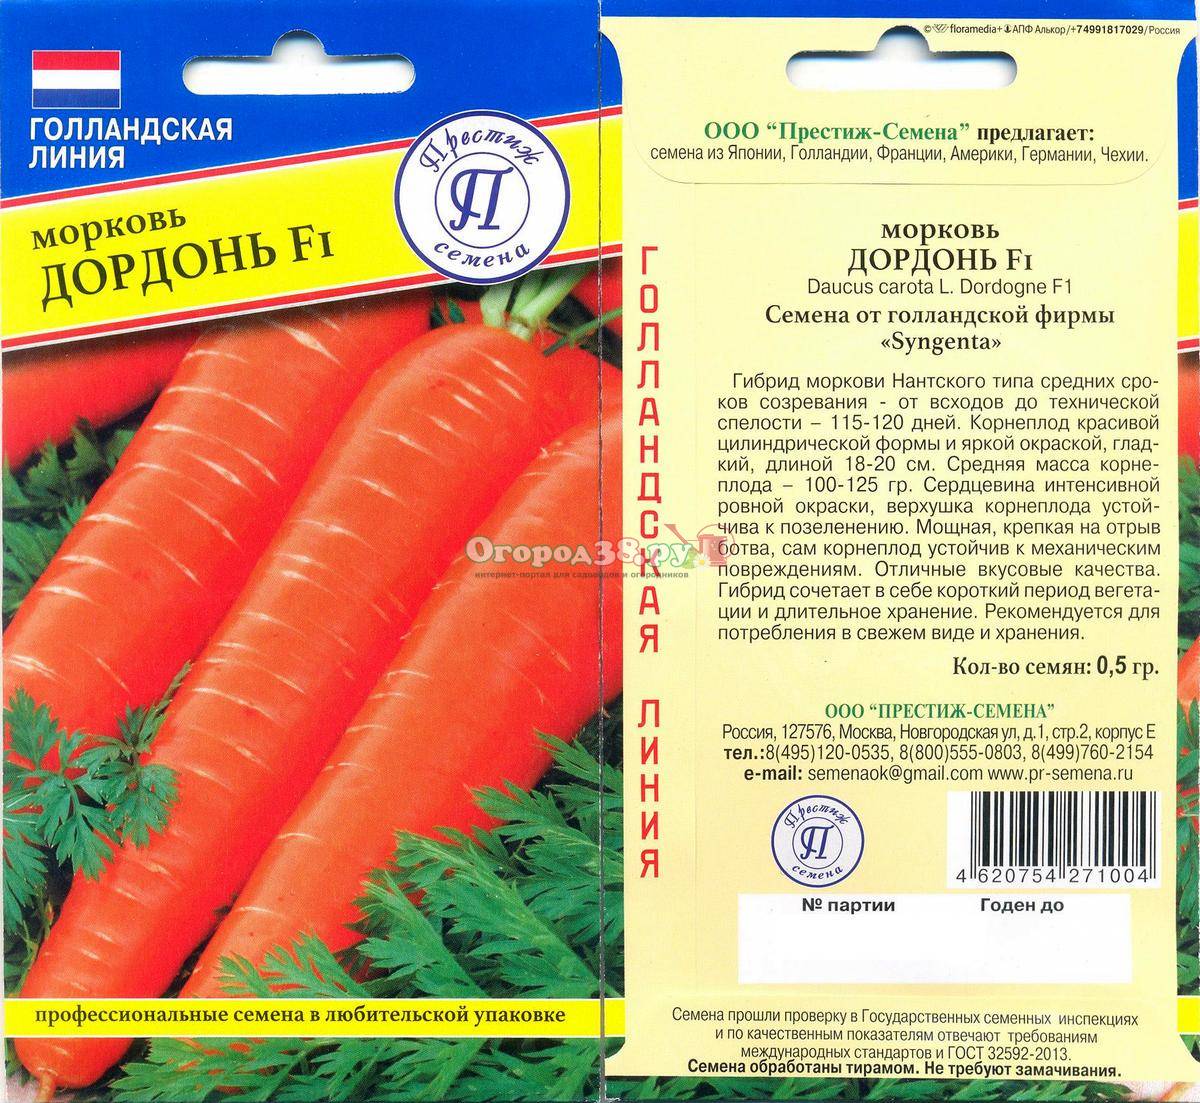 Морковь канада f1: описание и характеристика сорта, фото + отзывы